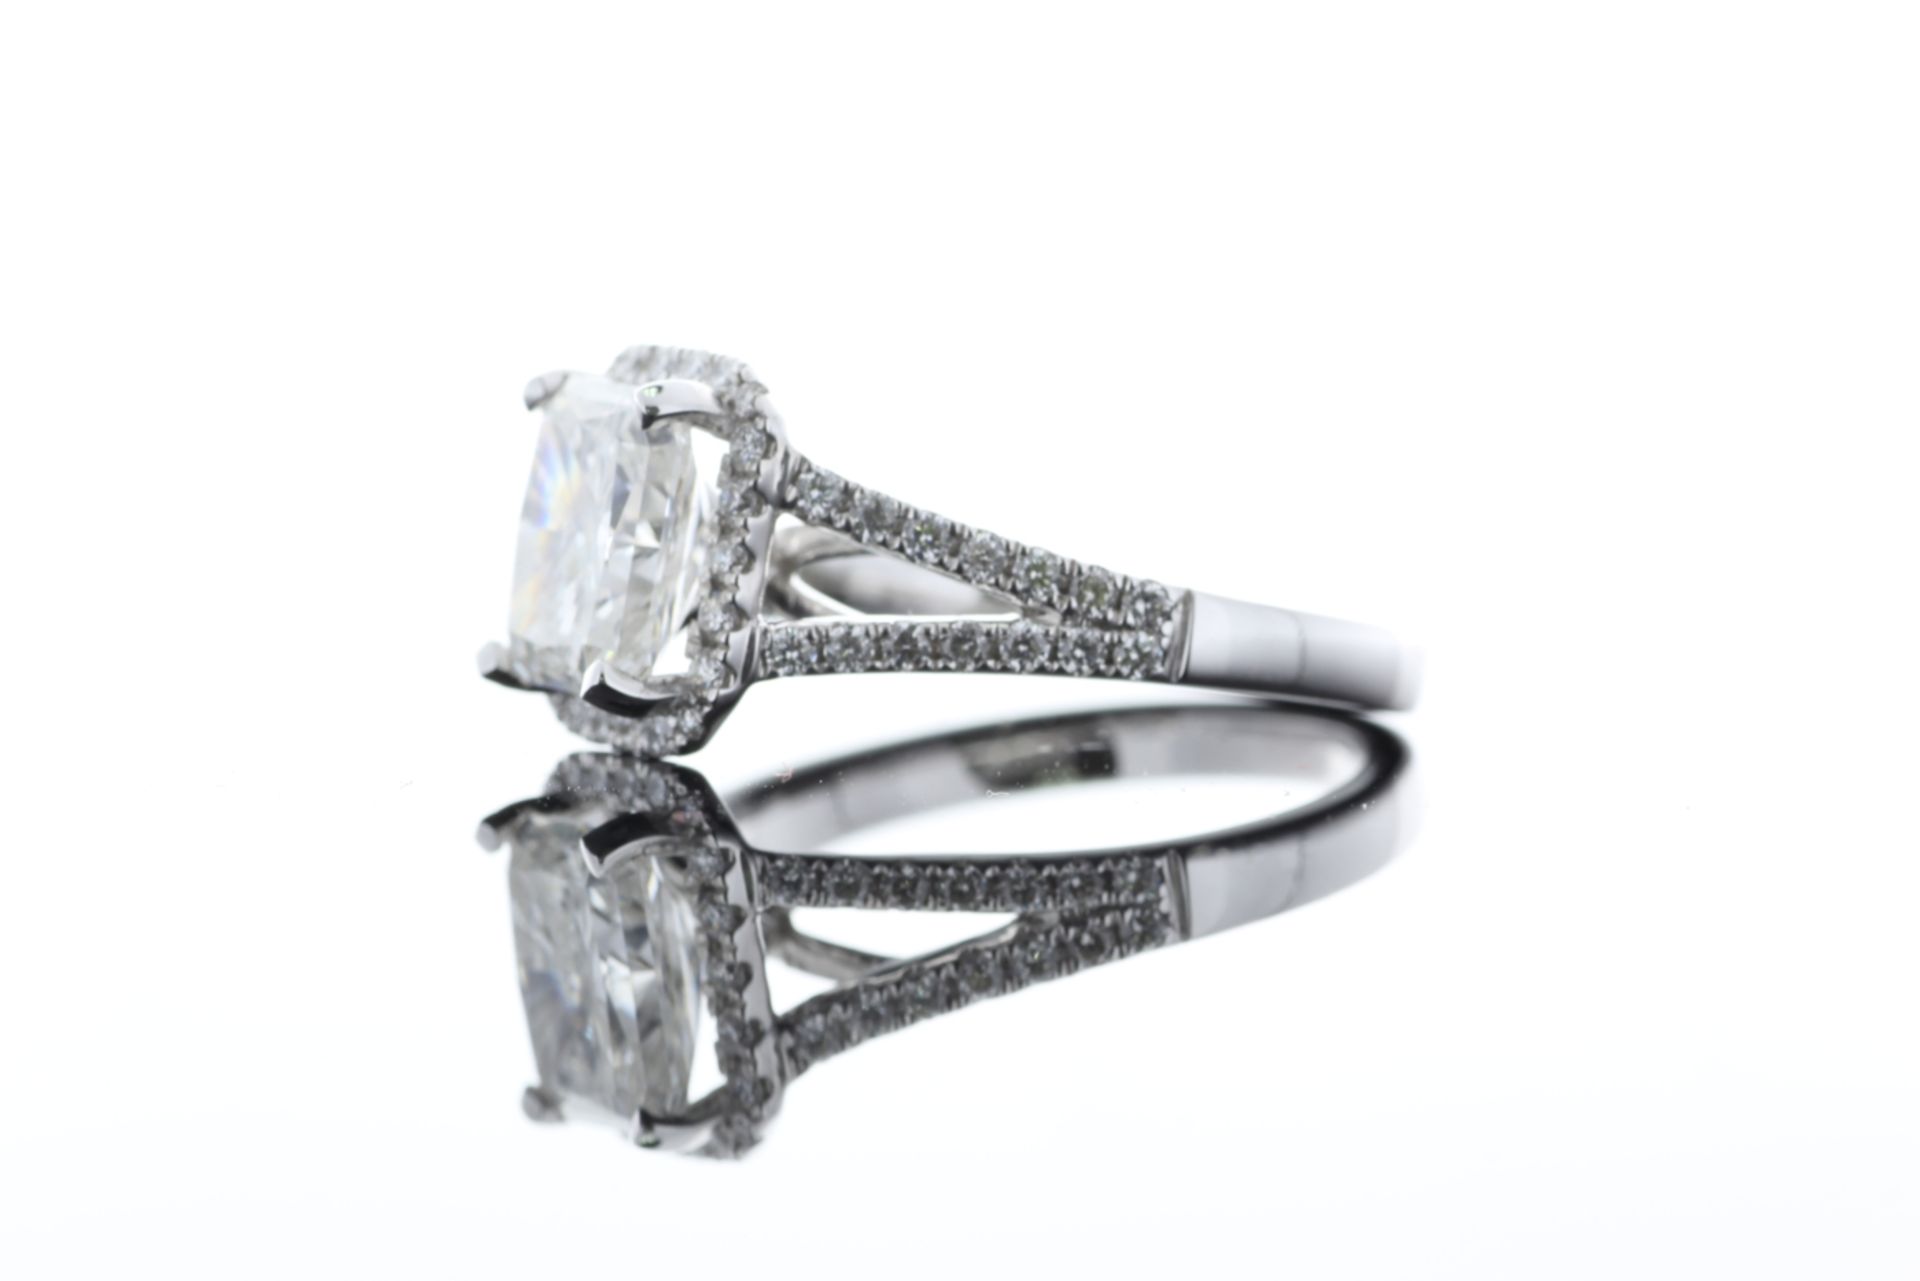 18ct White Gold Single Stone Radiant Cut Diamond With Halo Setting Ring 2.51 (2.01) - Image 14 of 73